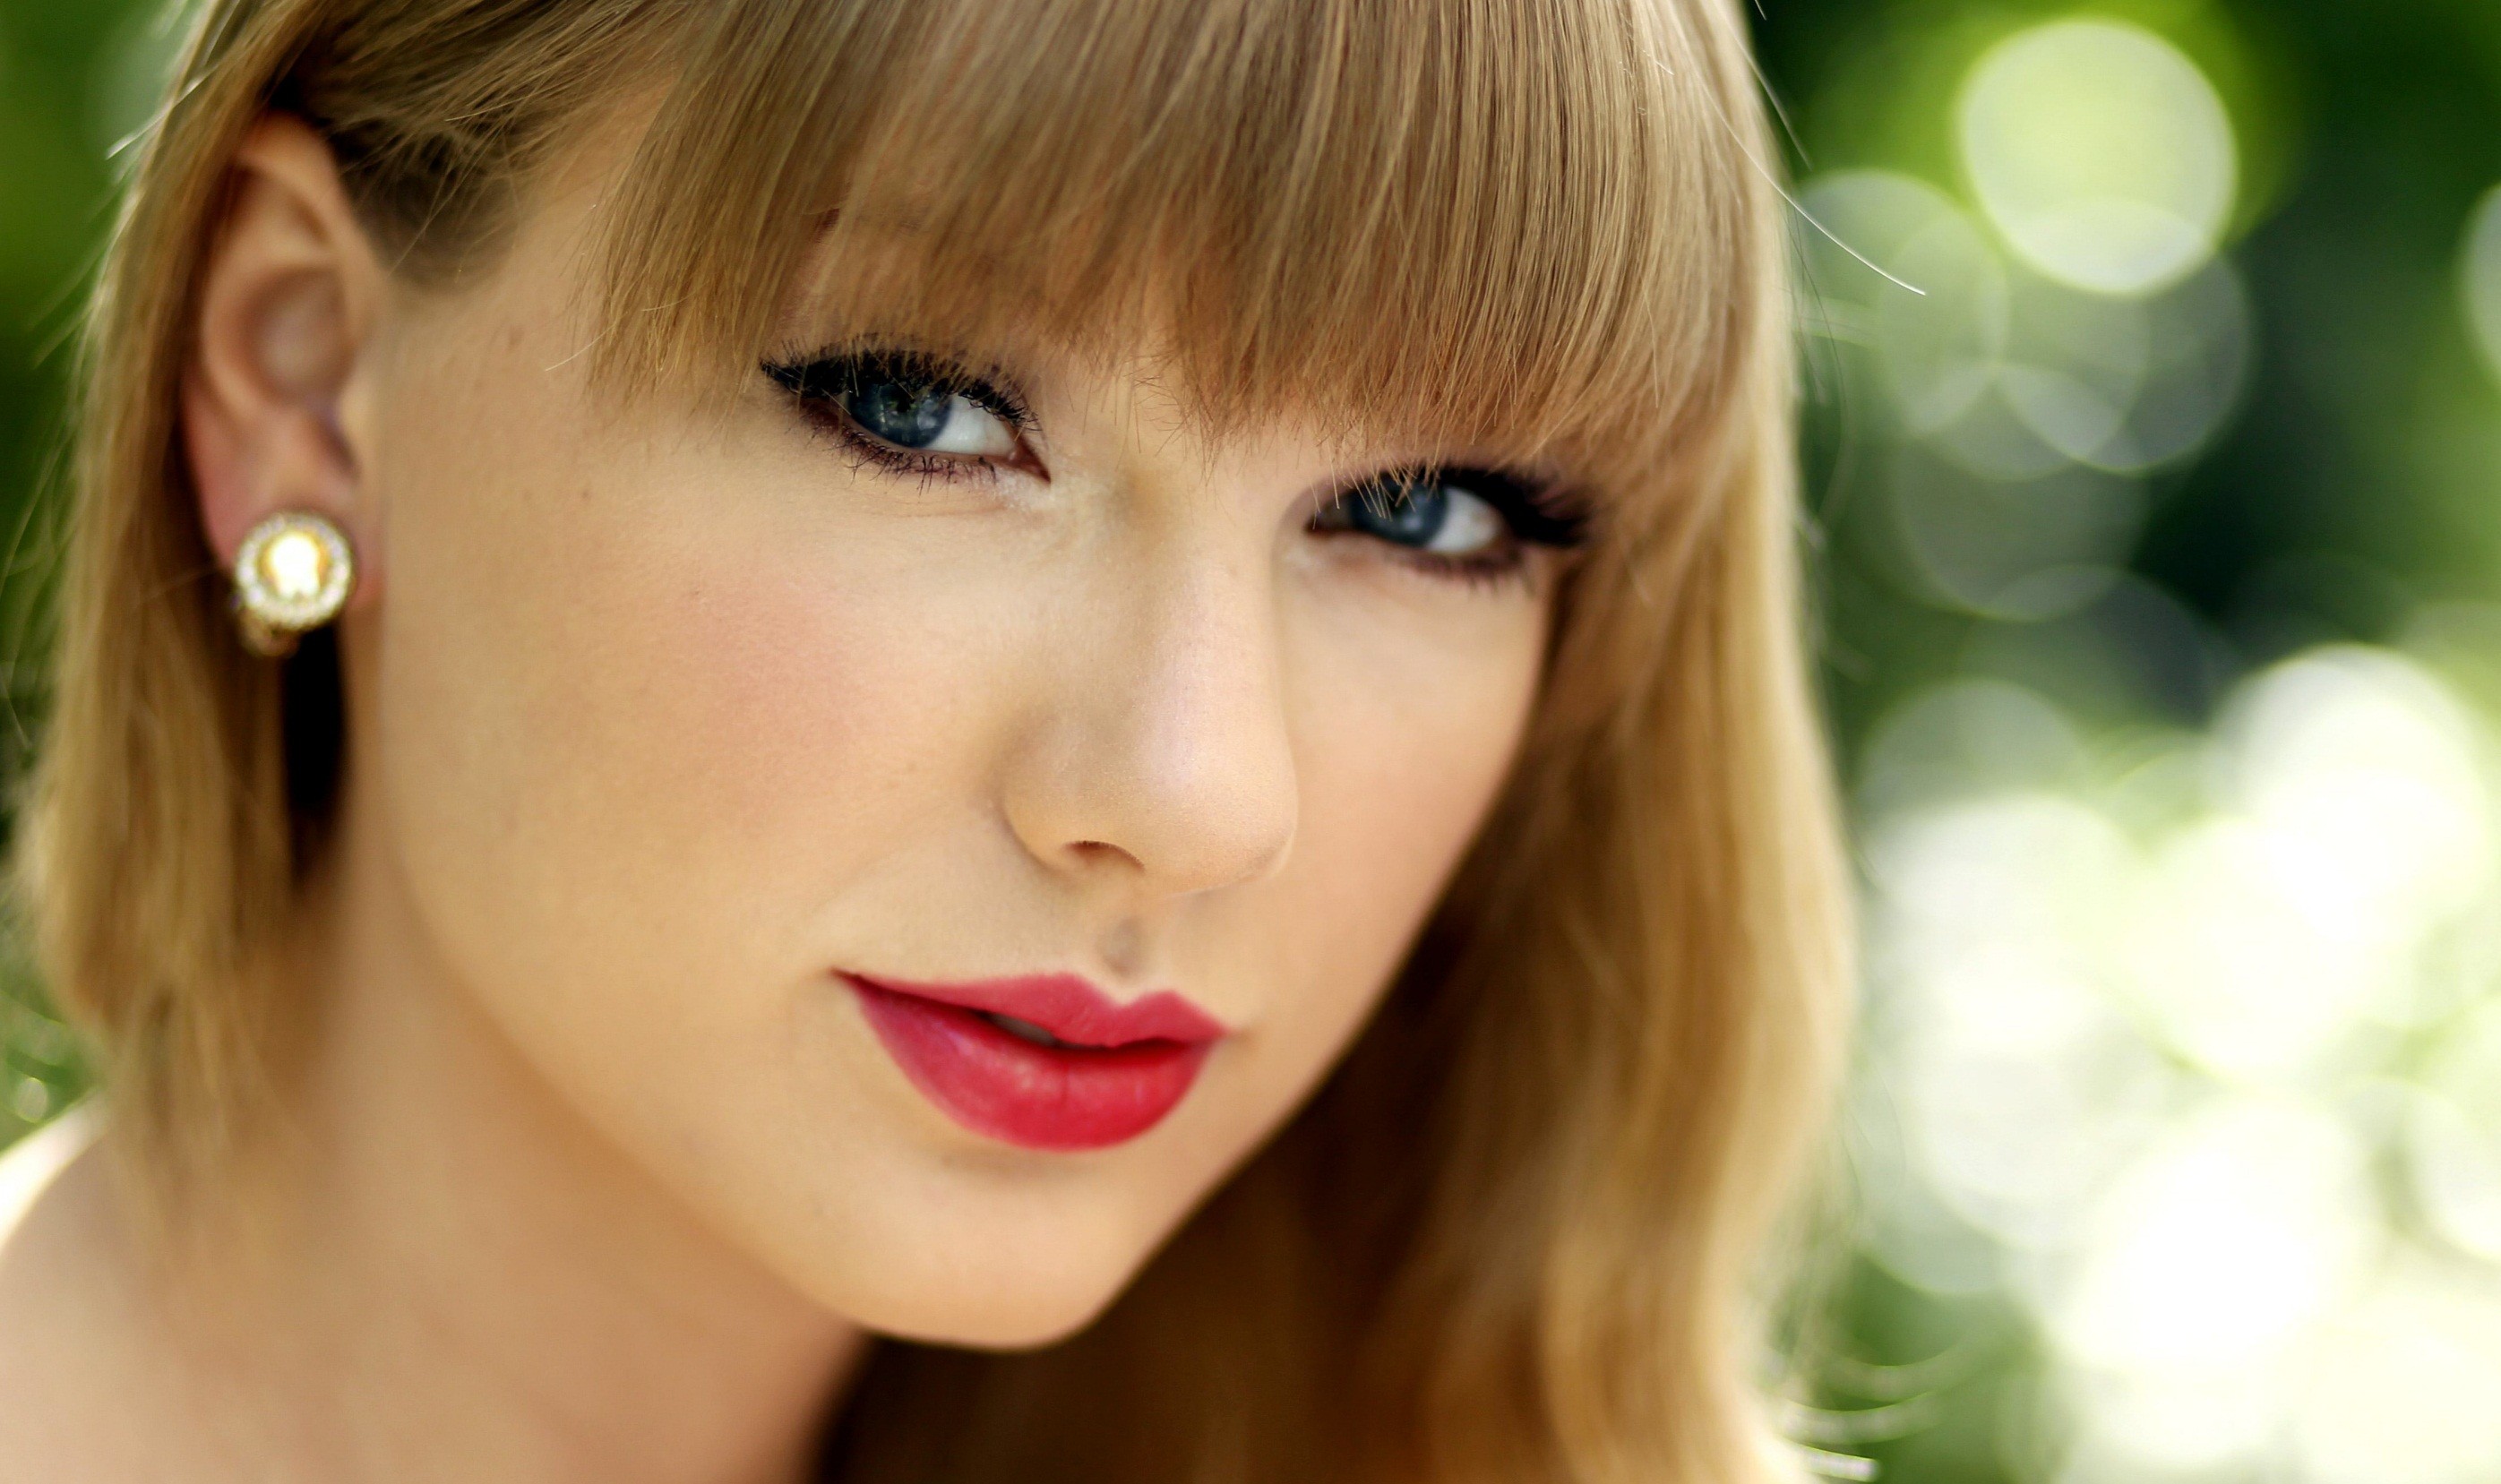 People 2792x1657 Taylor Swift women singer face blonde closeup red lipstick blue eyes ear studs looking at viewer makeup American women